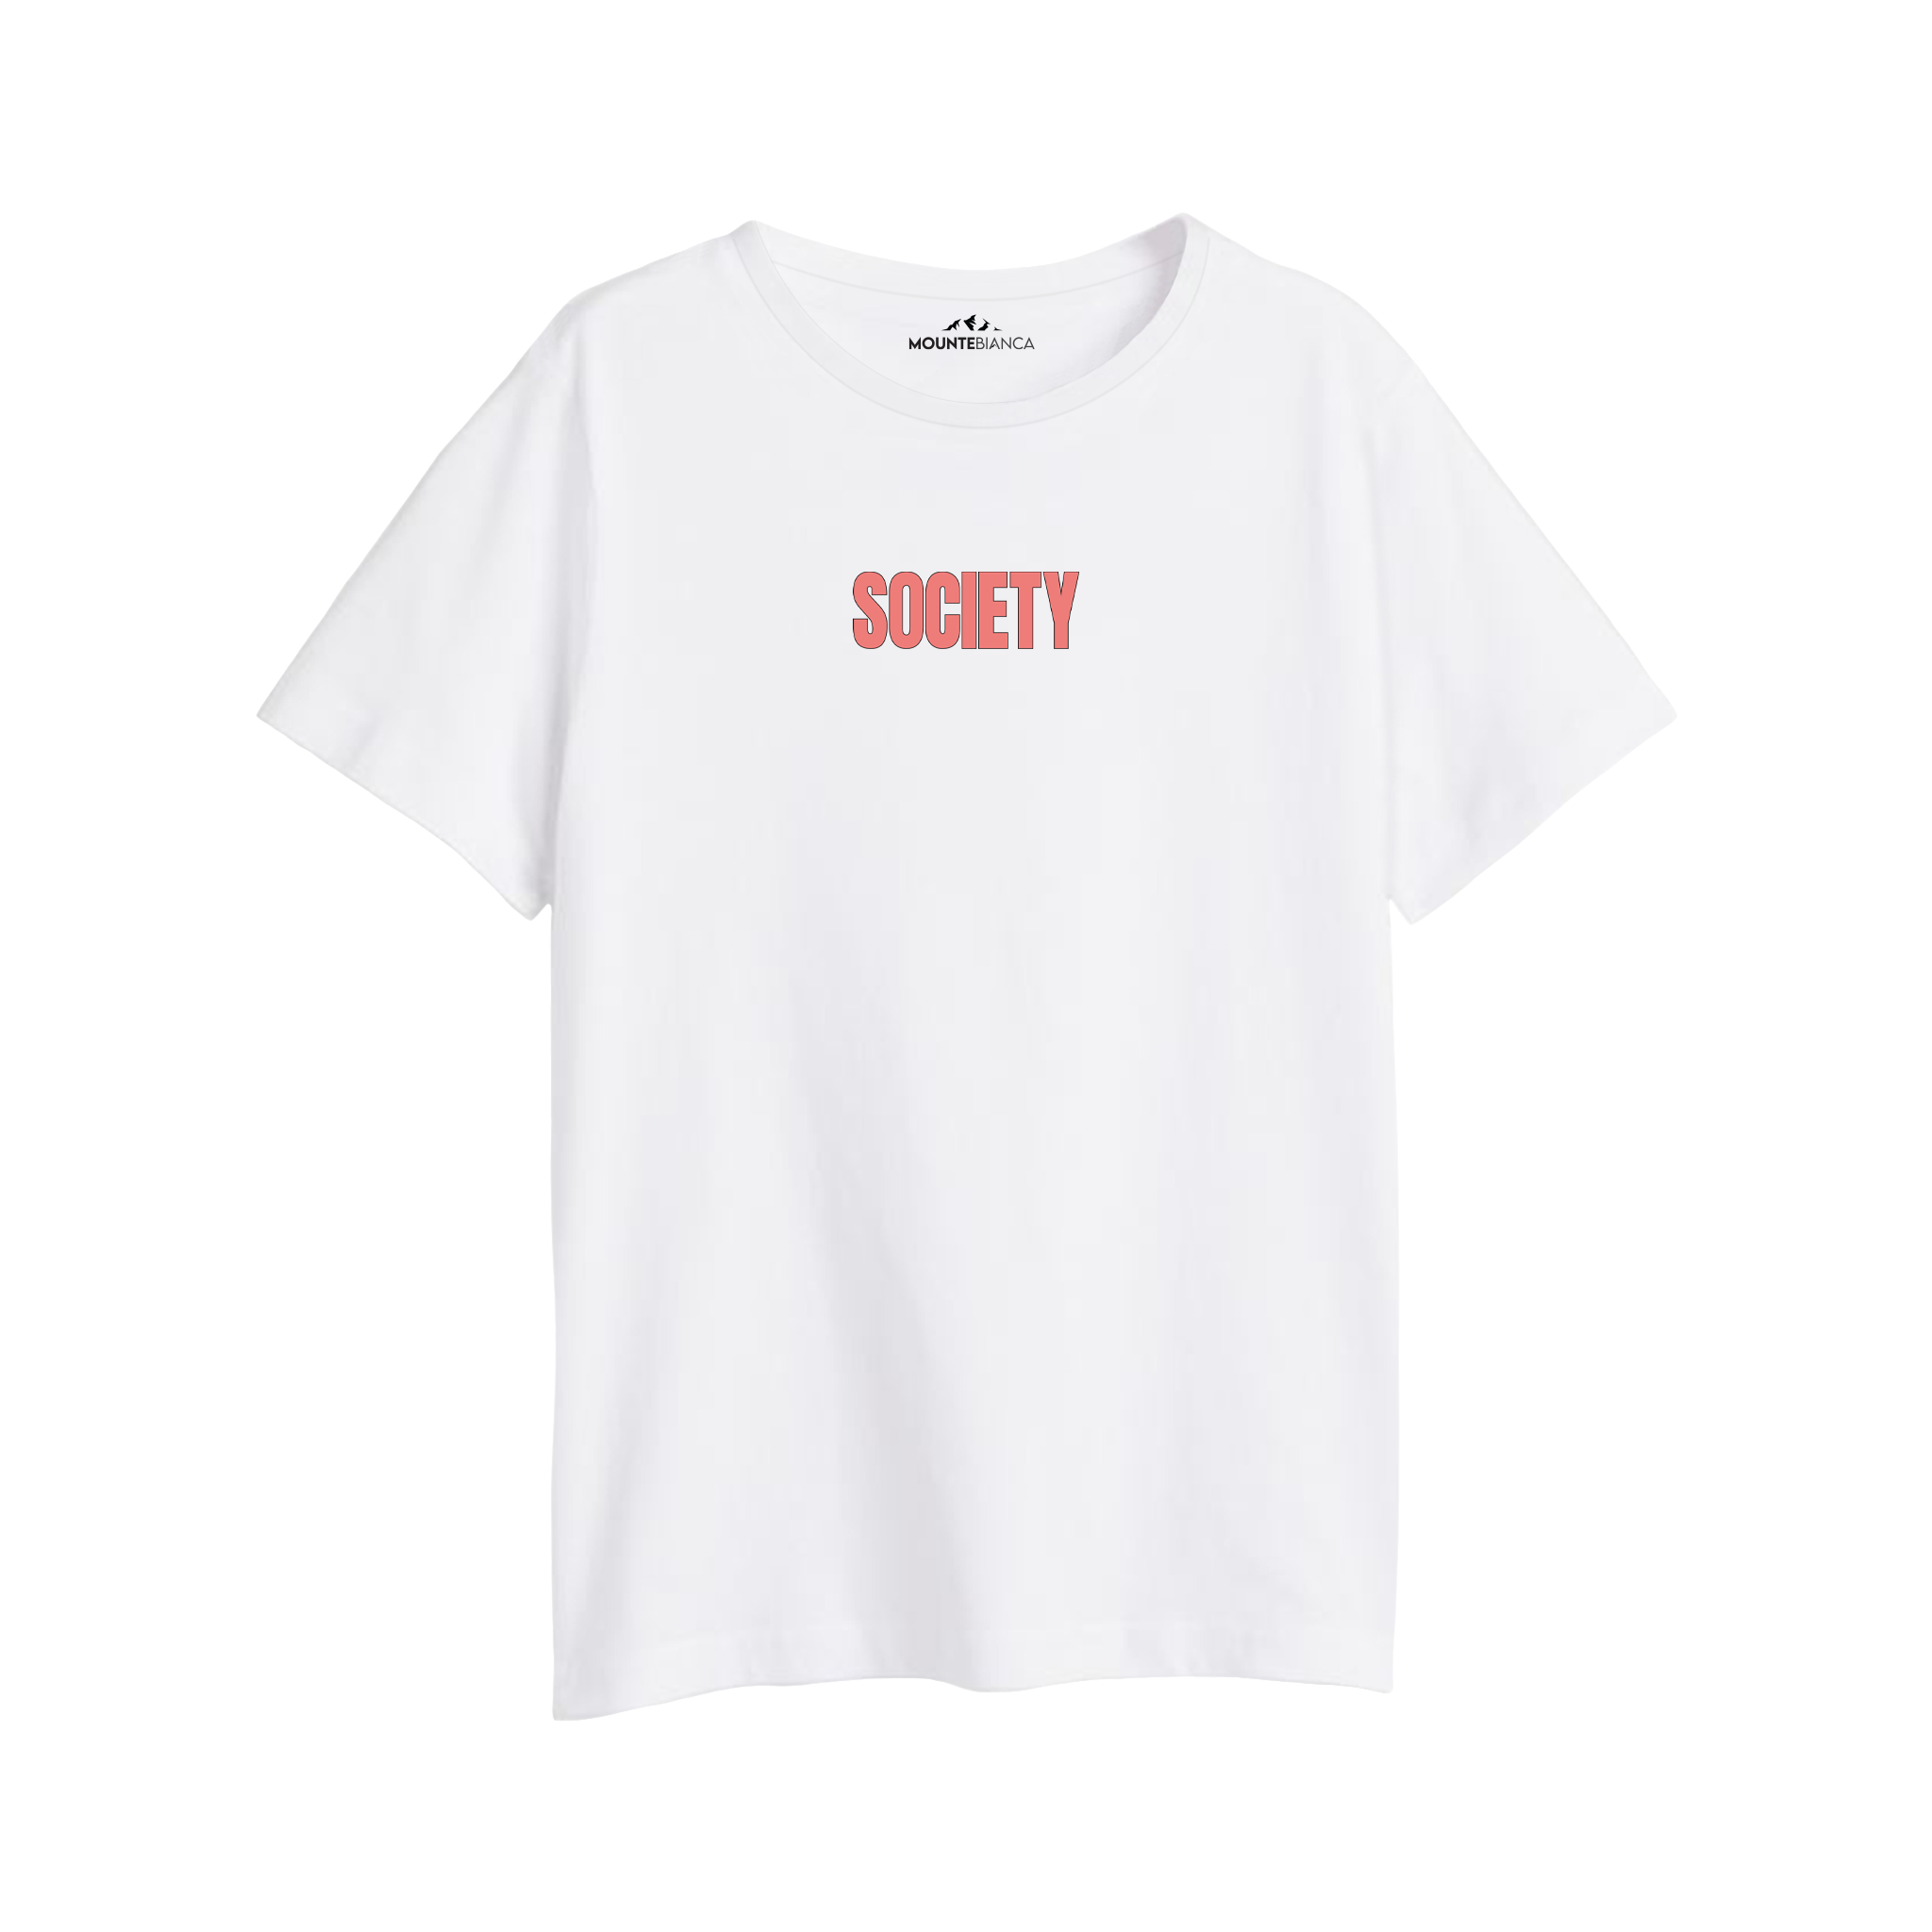 Society - Çocuk T-Shirt